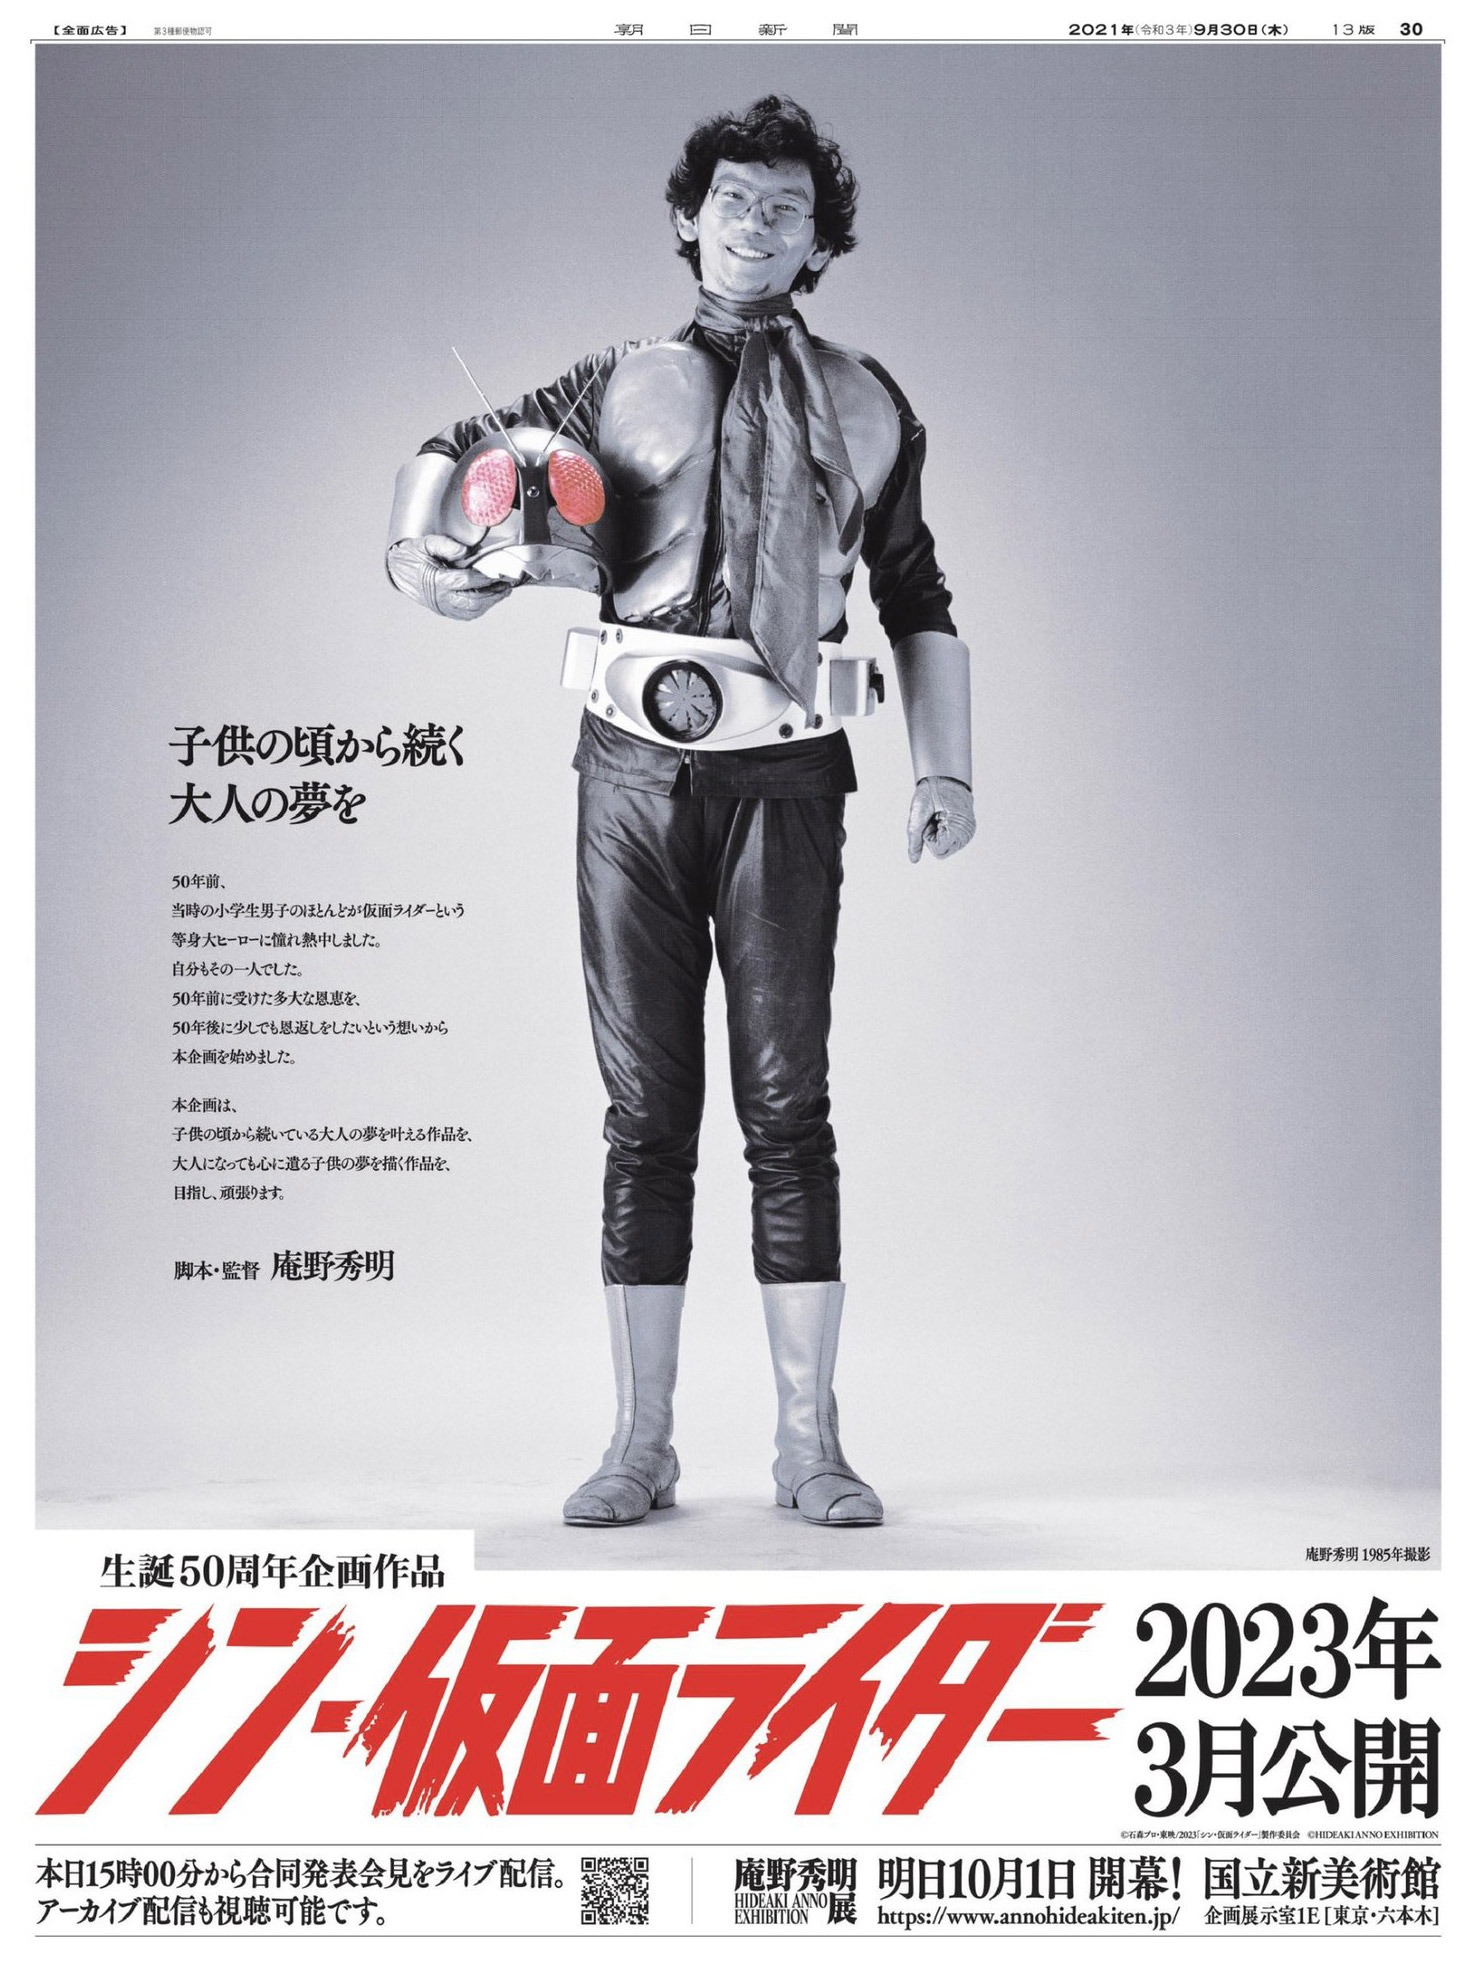 Hideaki Anno dressed up as Kamen Rider as a kid